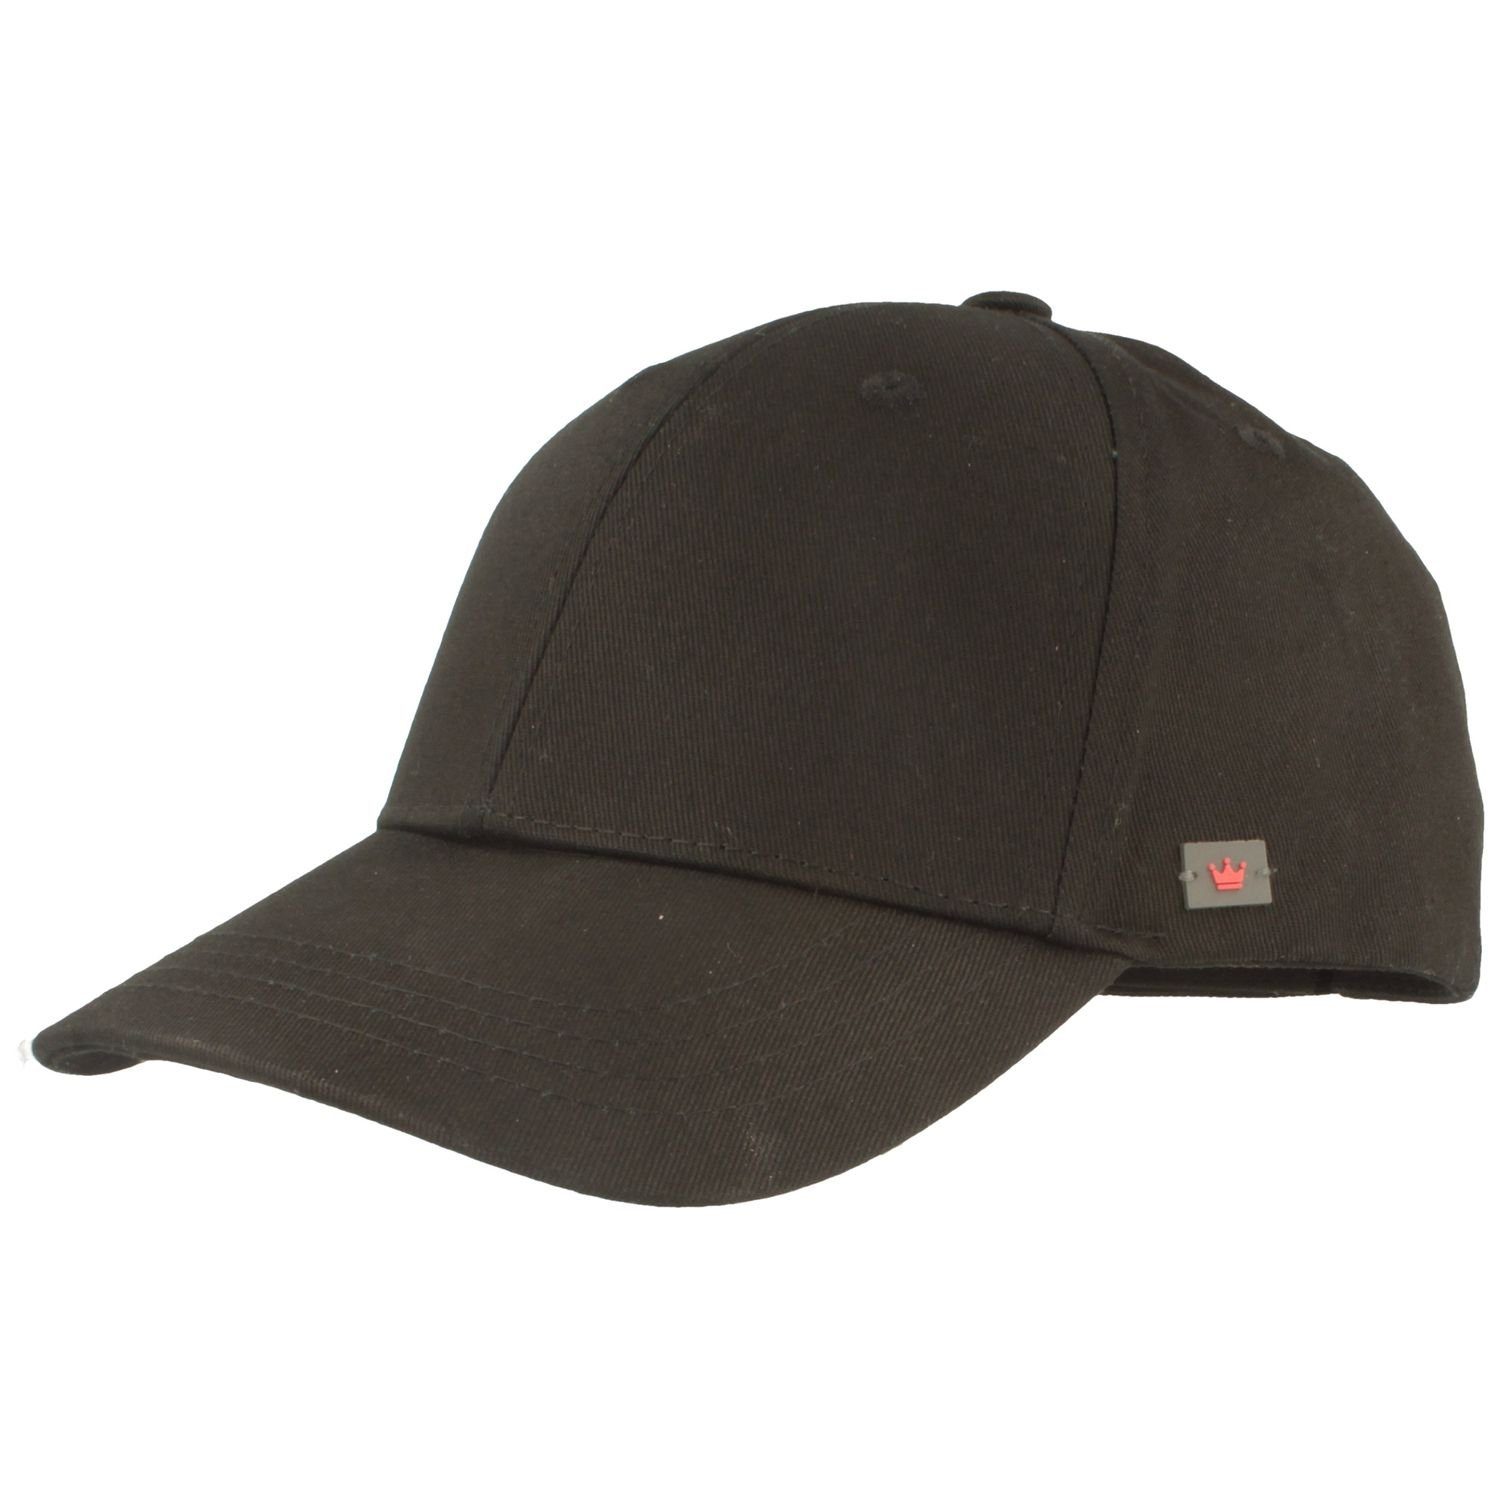 Balke Baseball Cap Baumwoll-Baseball-Cap schwarz Einfarbige 500